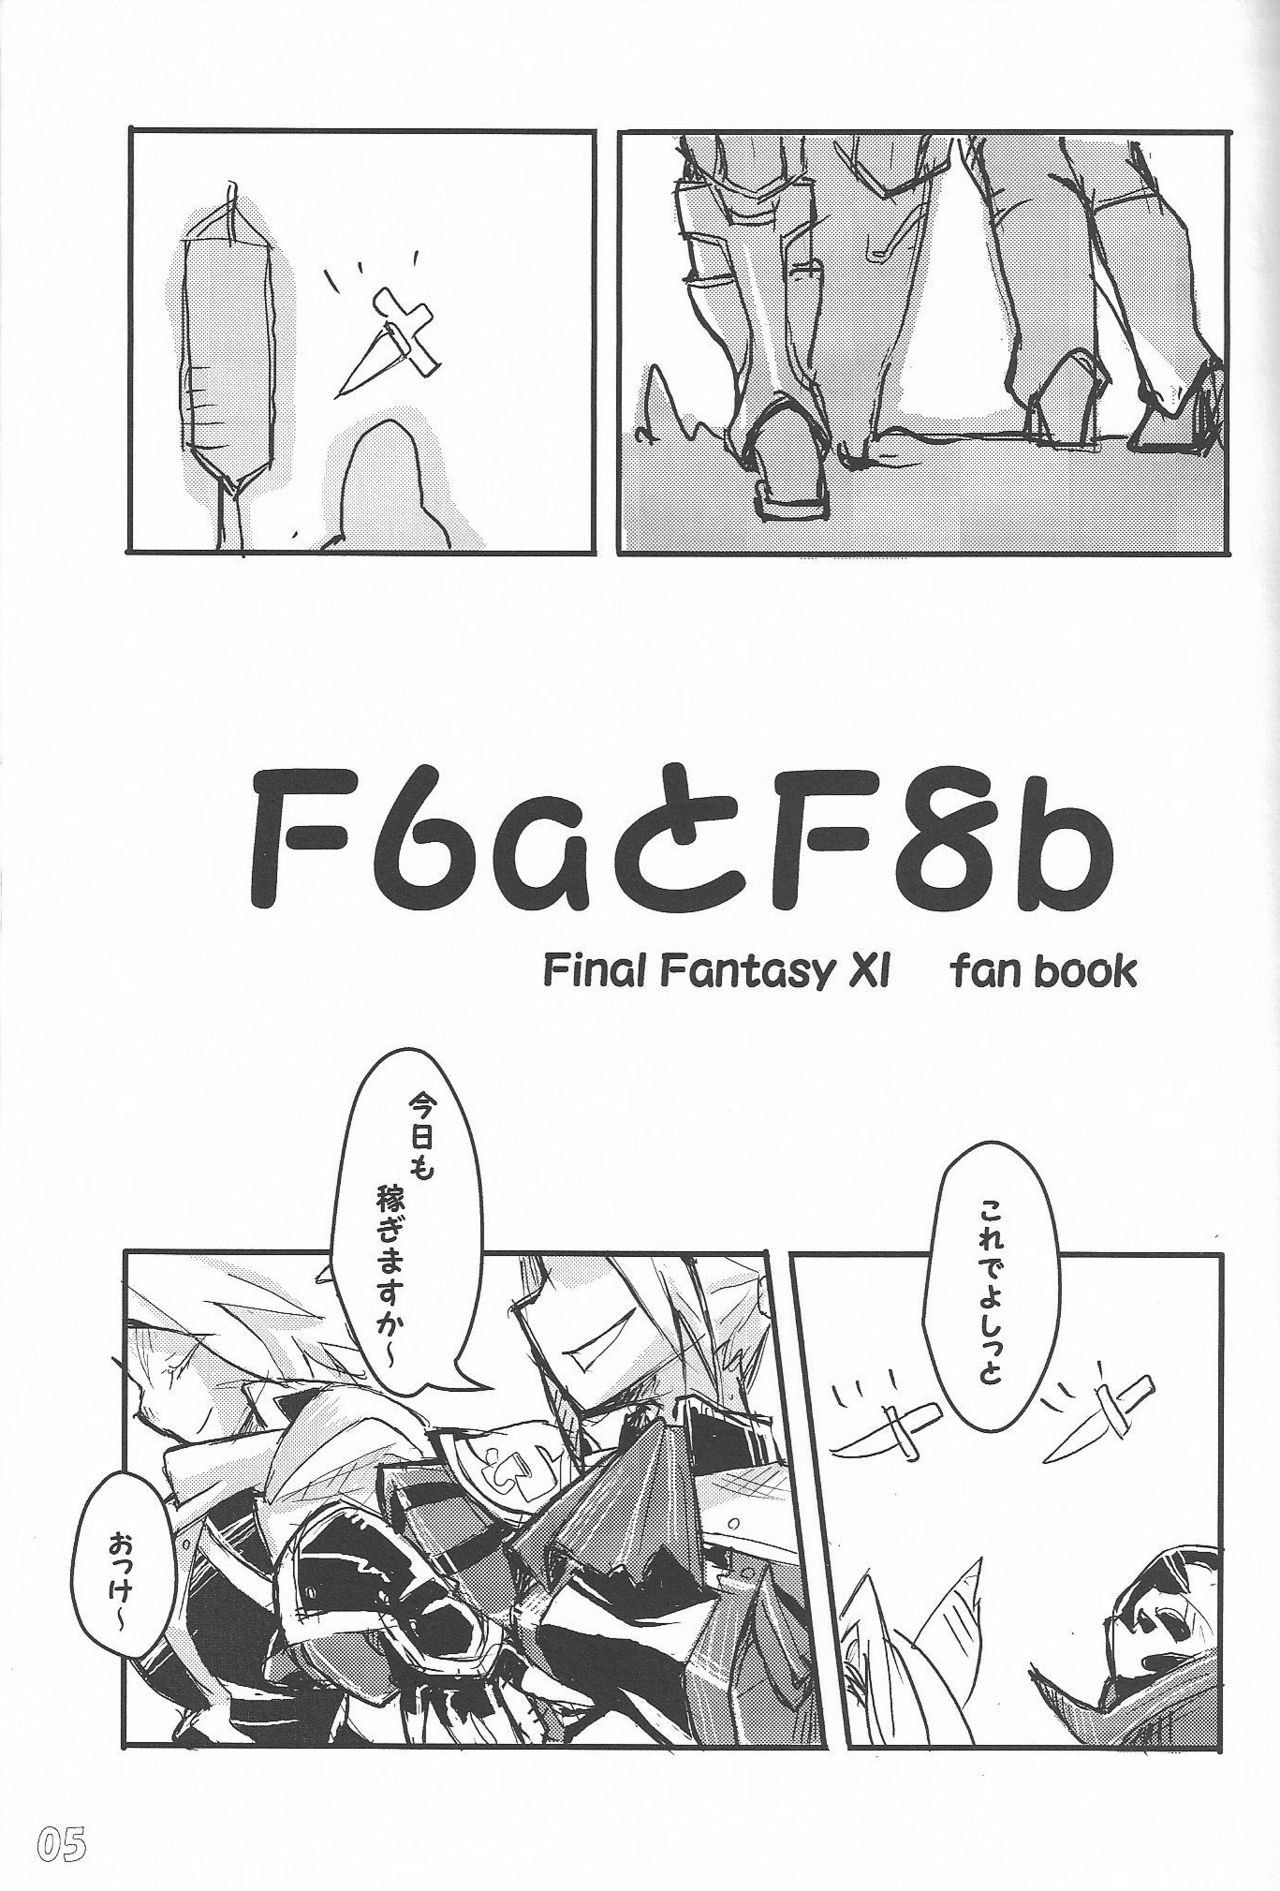 [Bookshelf] F6a with F8b (FFXI) 